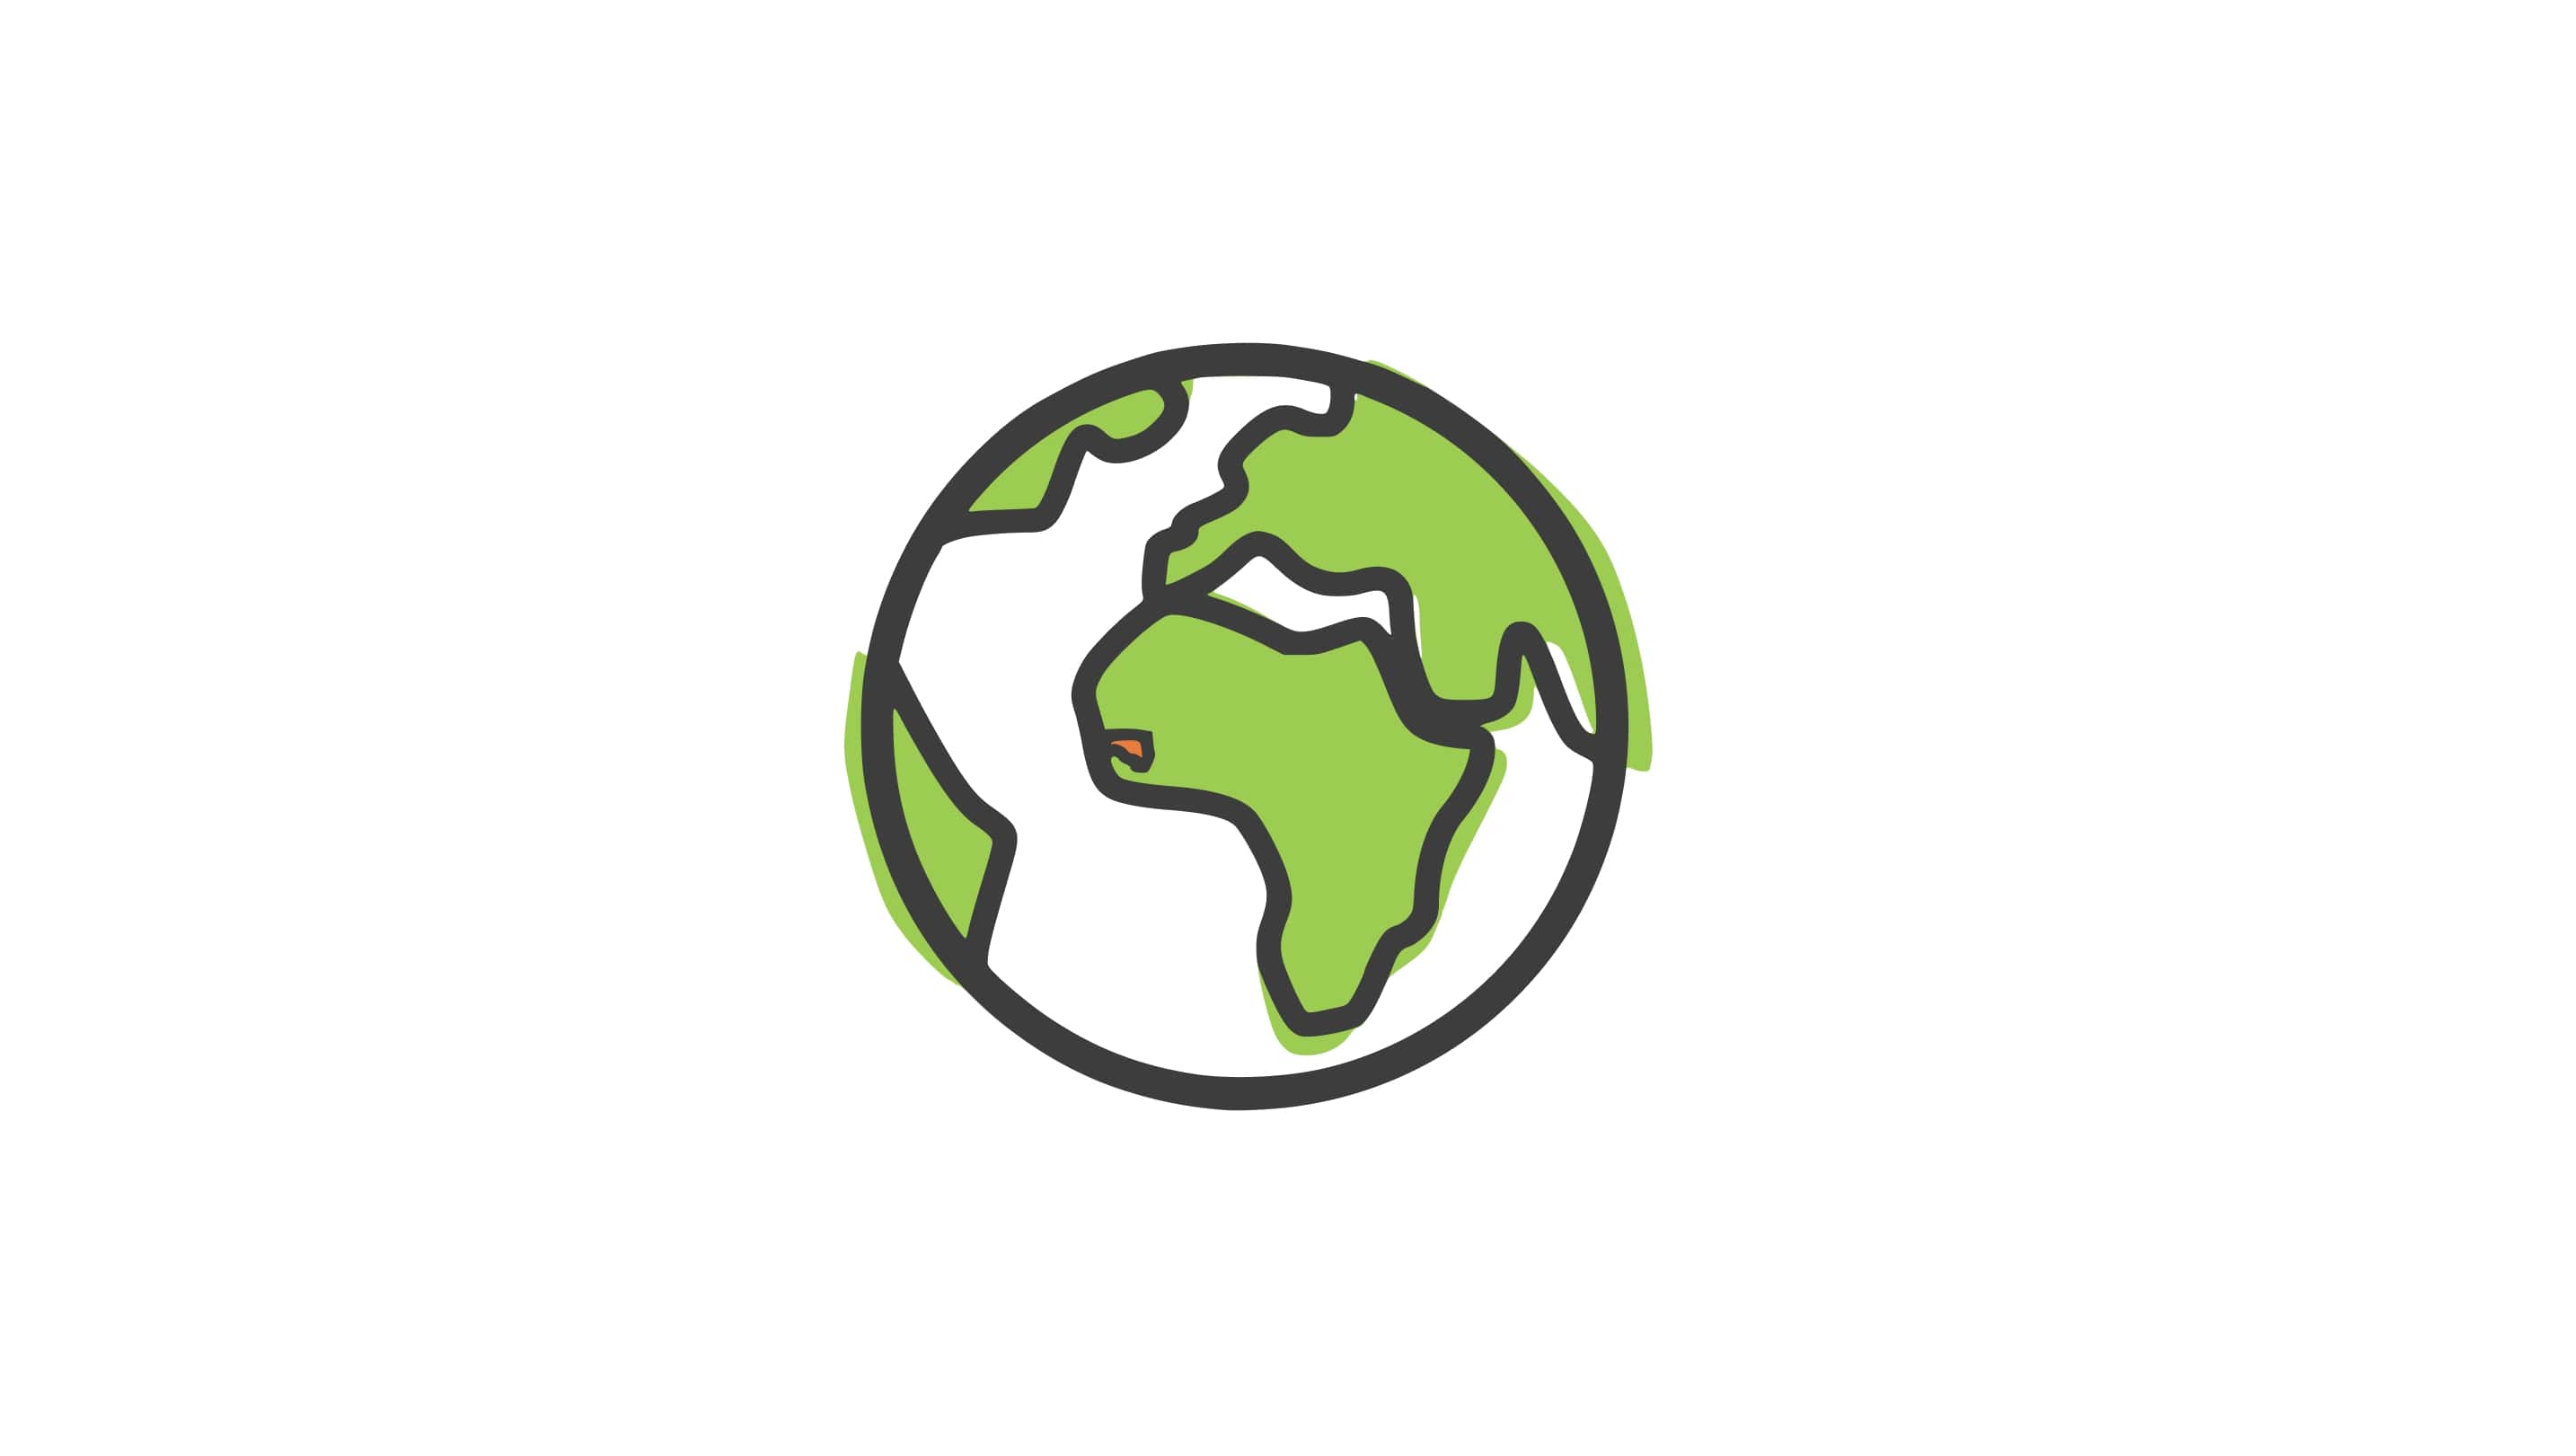 Treeapp’s world icon showing Guinea